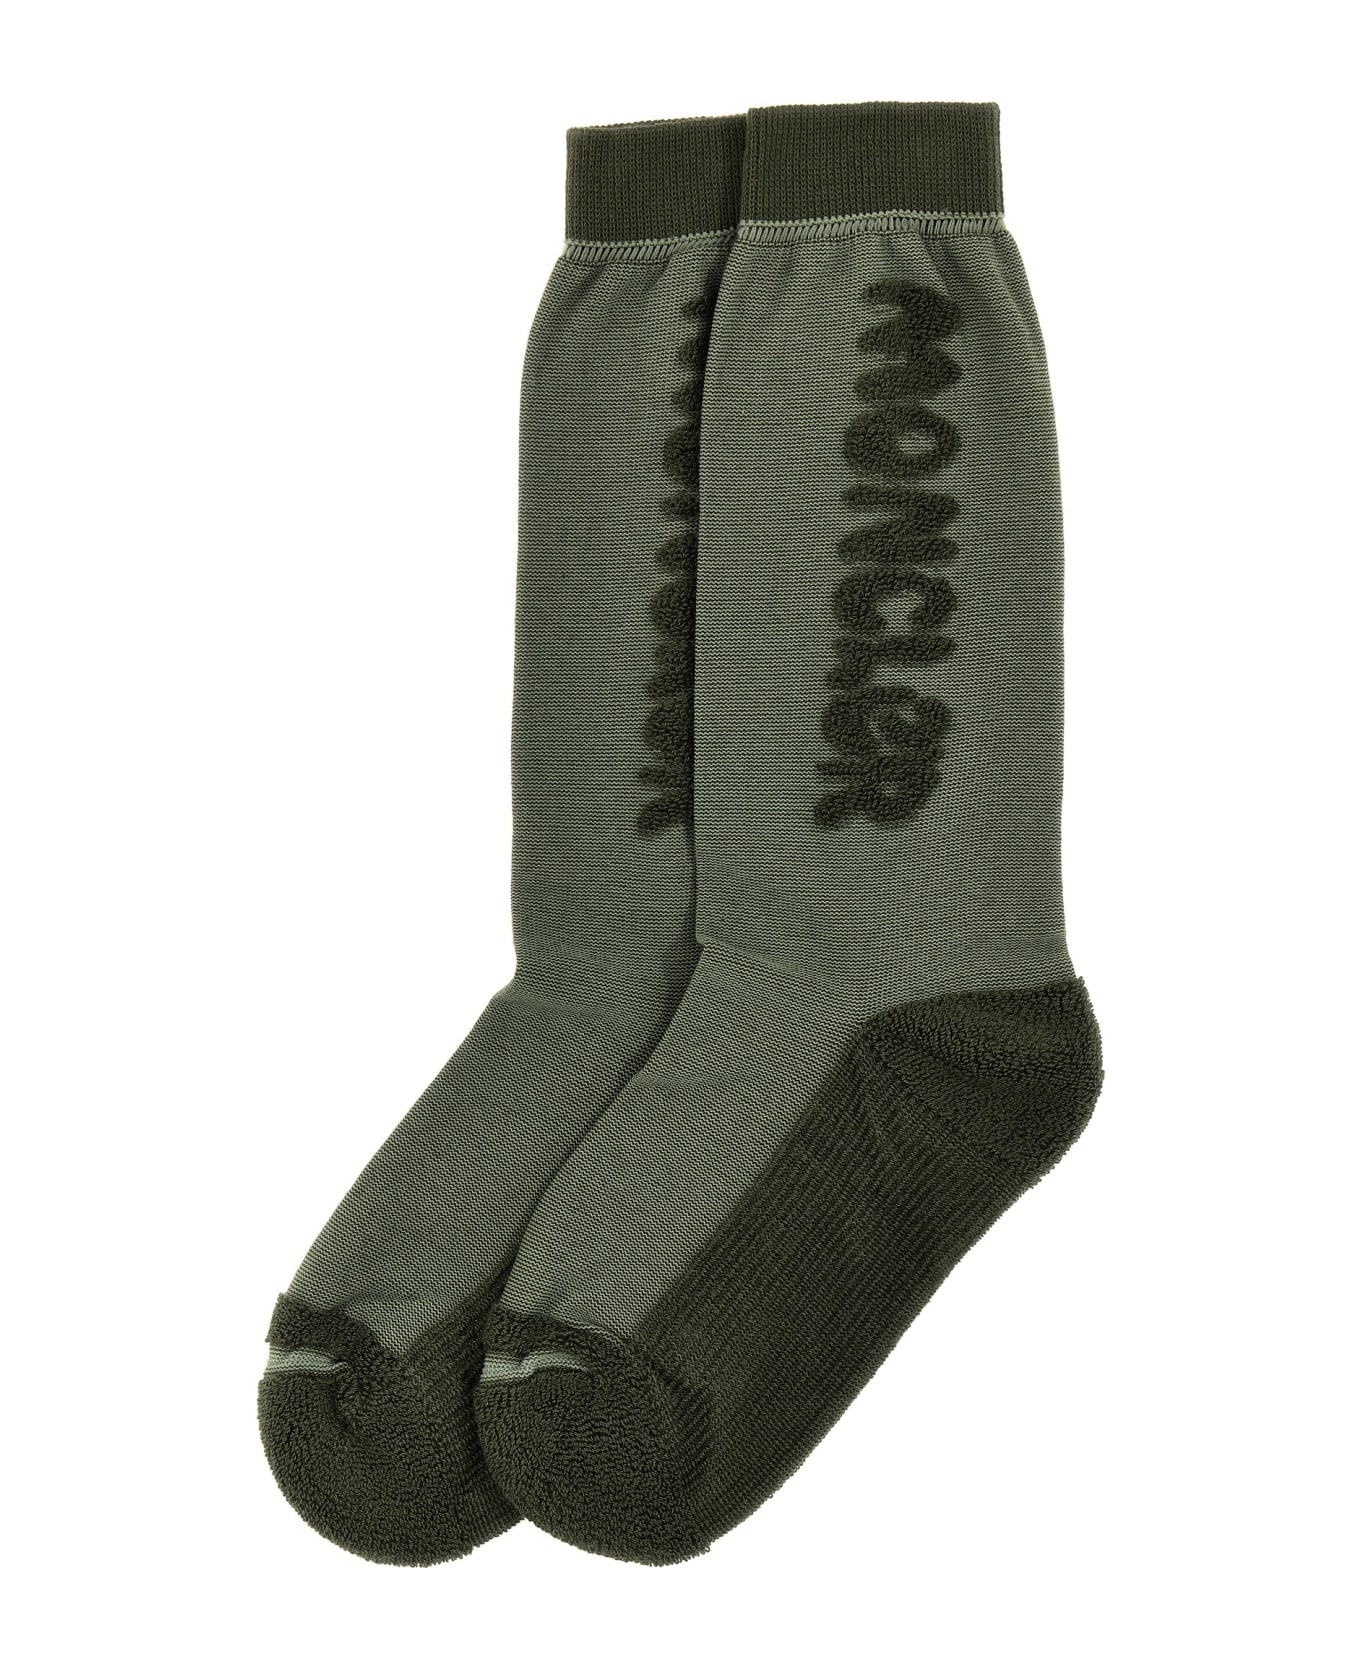 Moncler Genius X Salehe Bembury Socks - Green 靴下